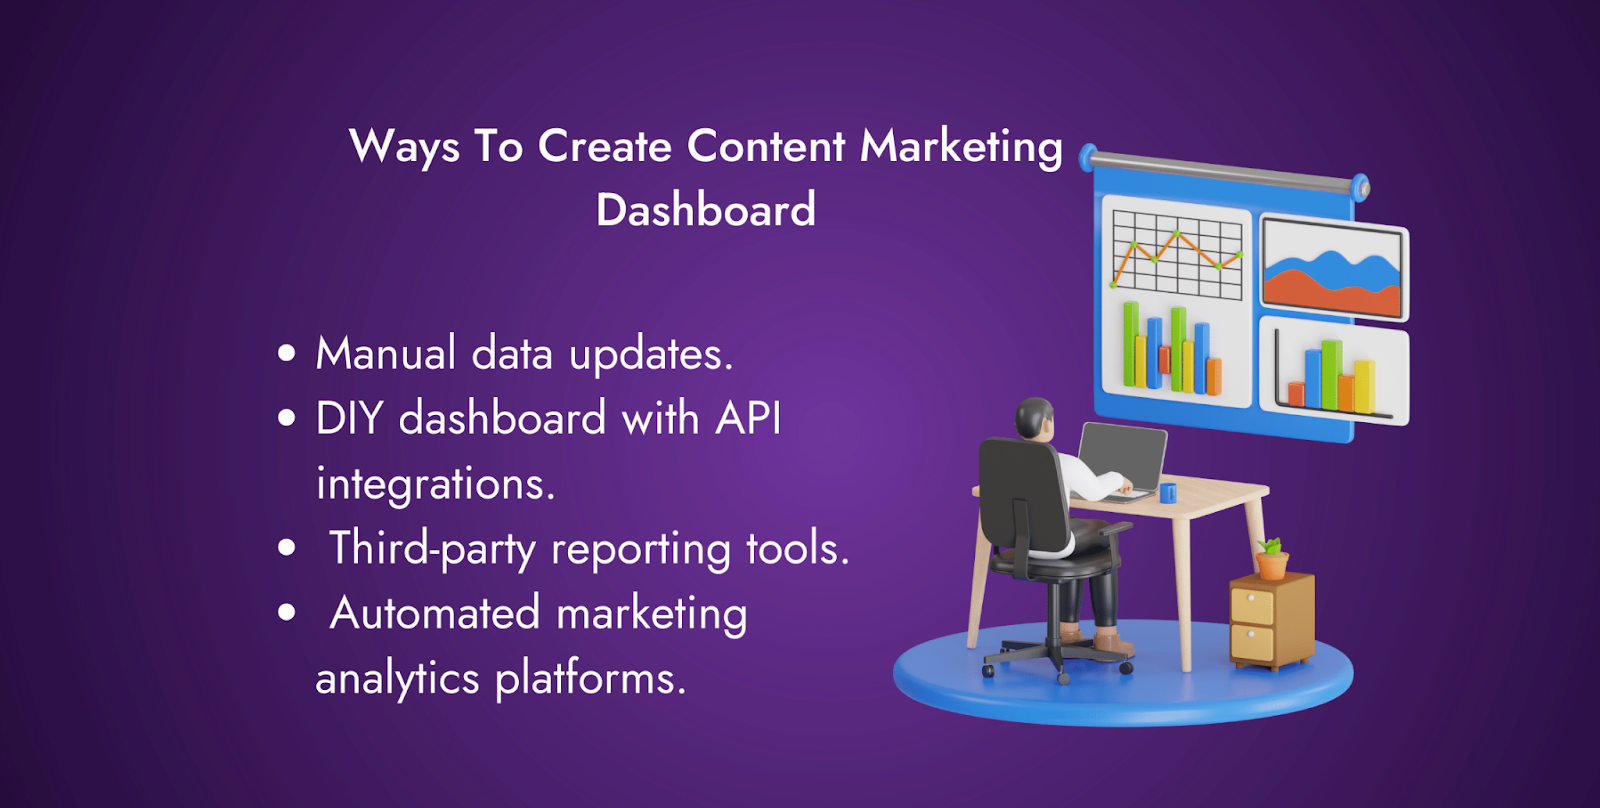 Ways to Create Content Marketing Dashboard 